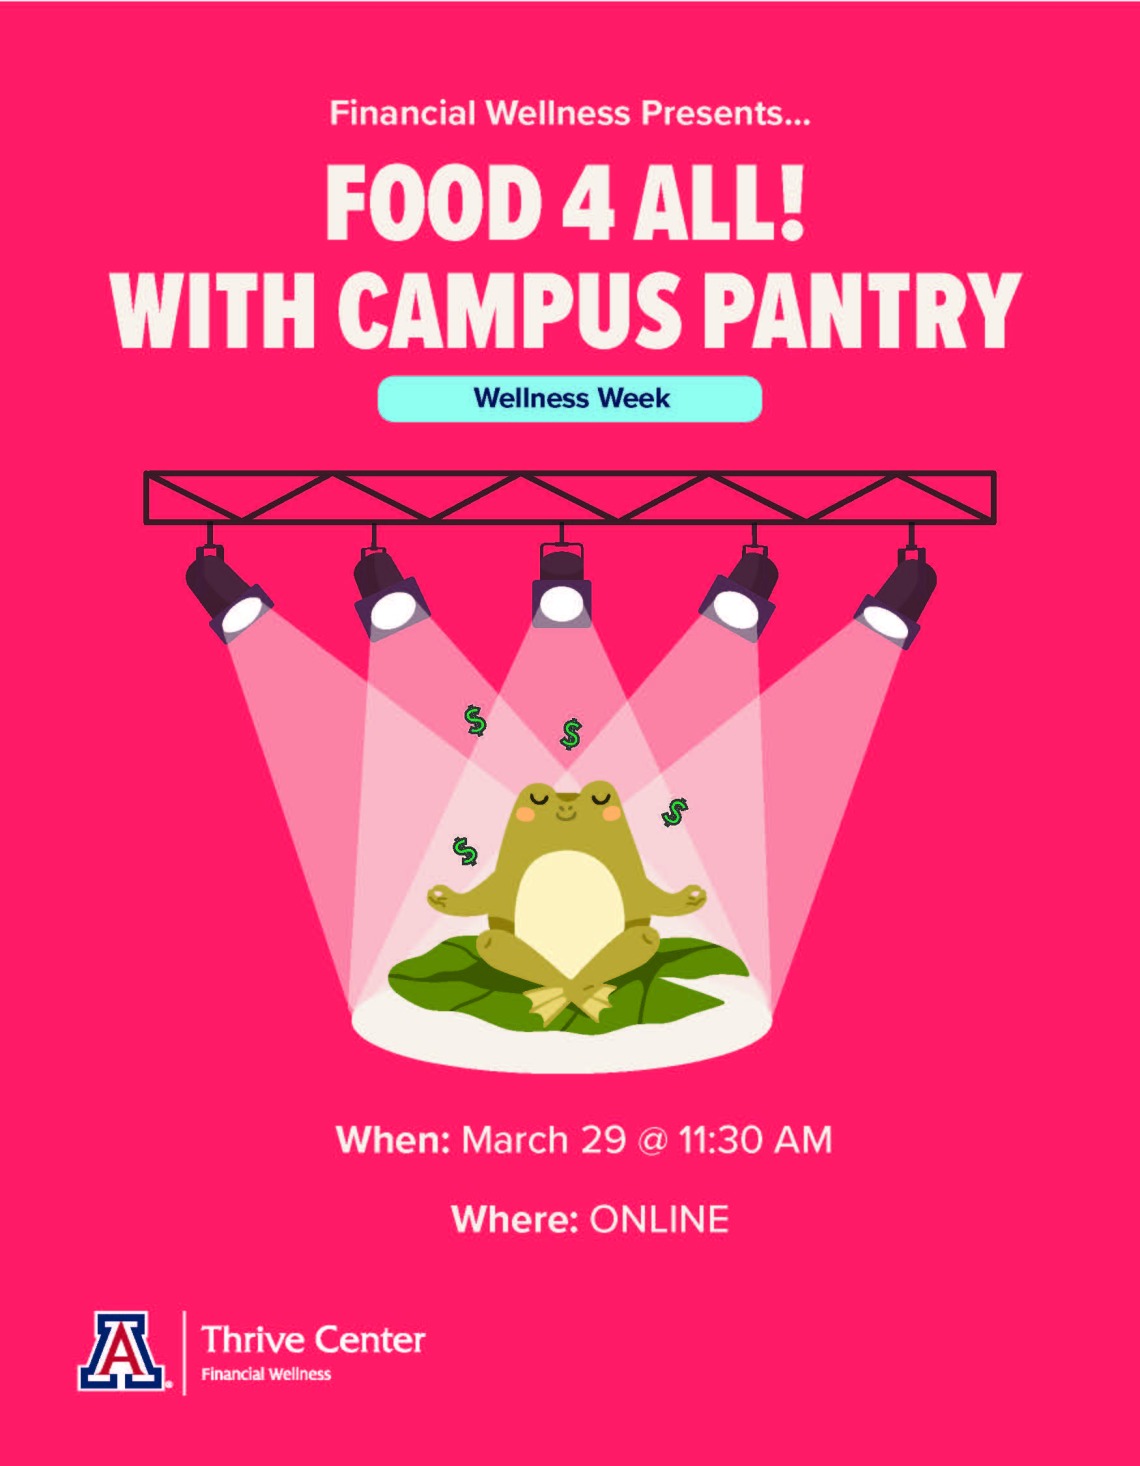 Campus Pantry